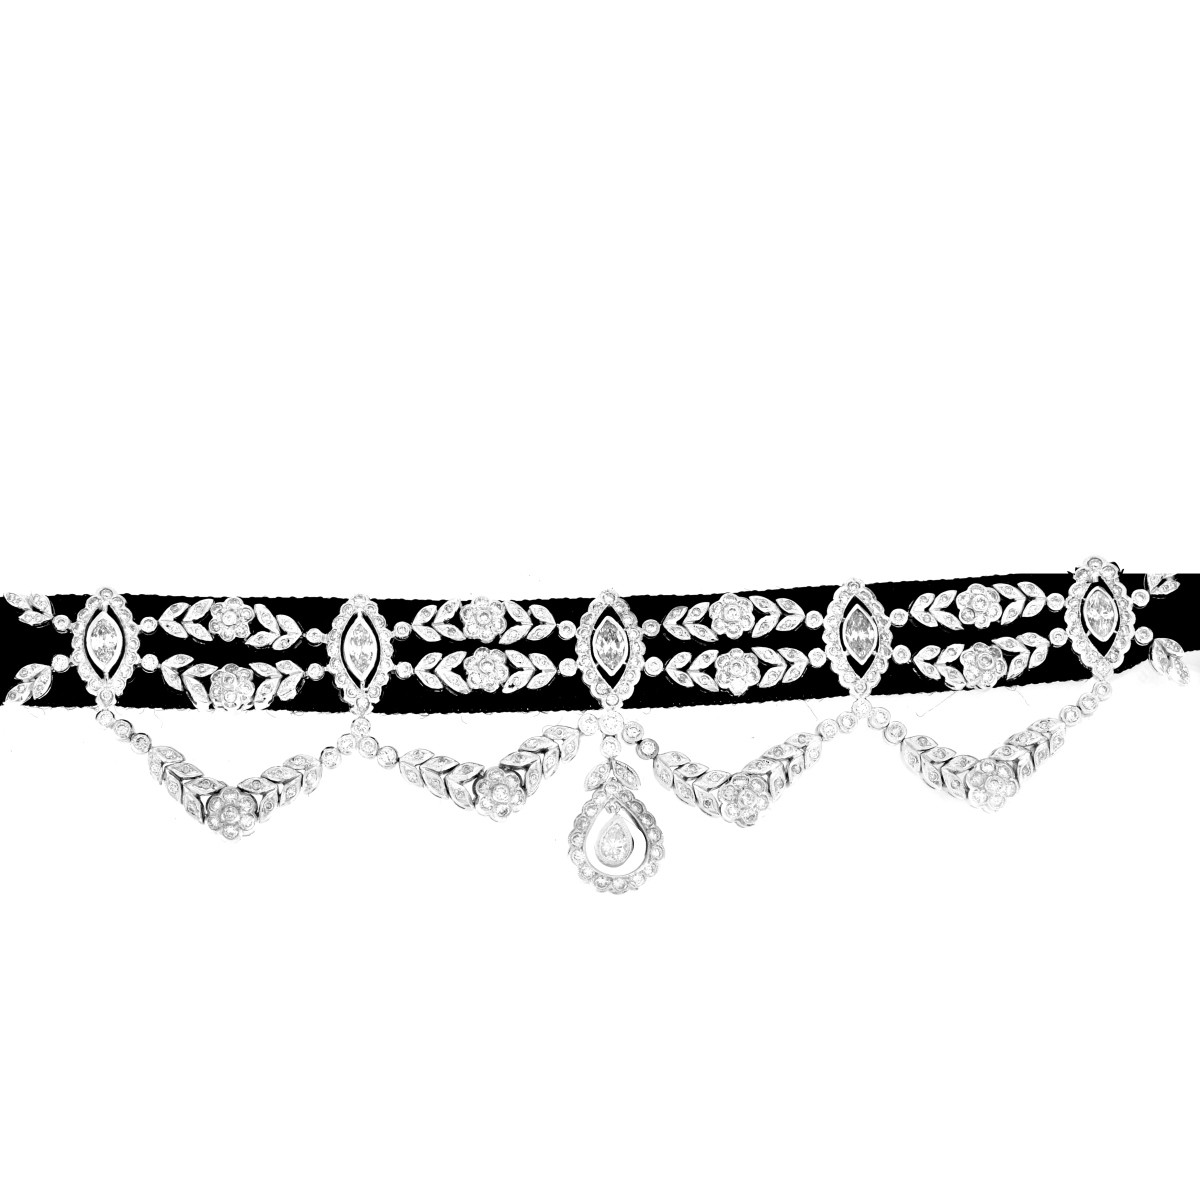 Edwardian Design Diamond and 18K Necklace